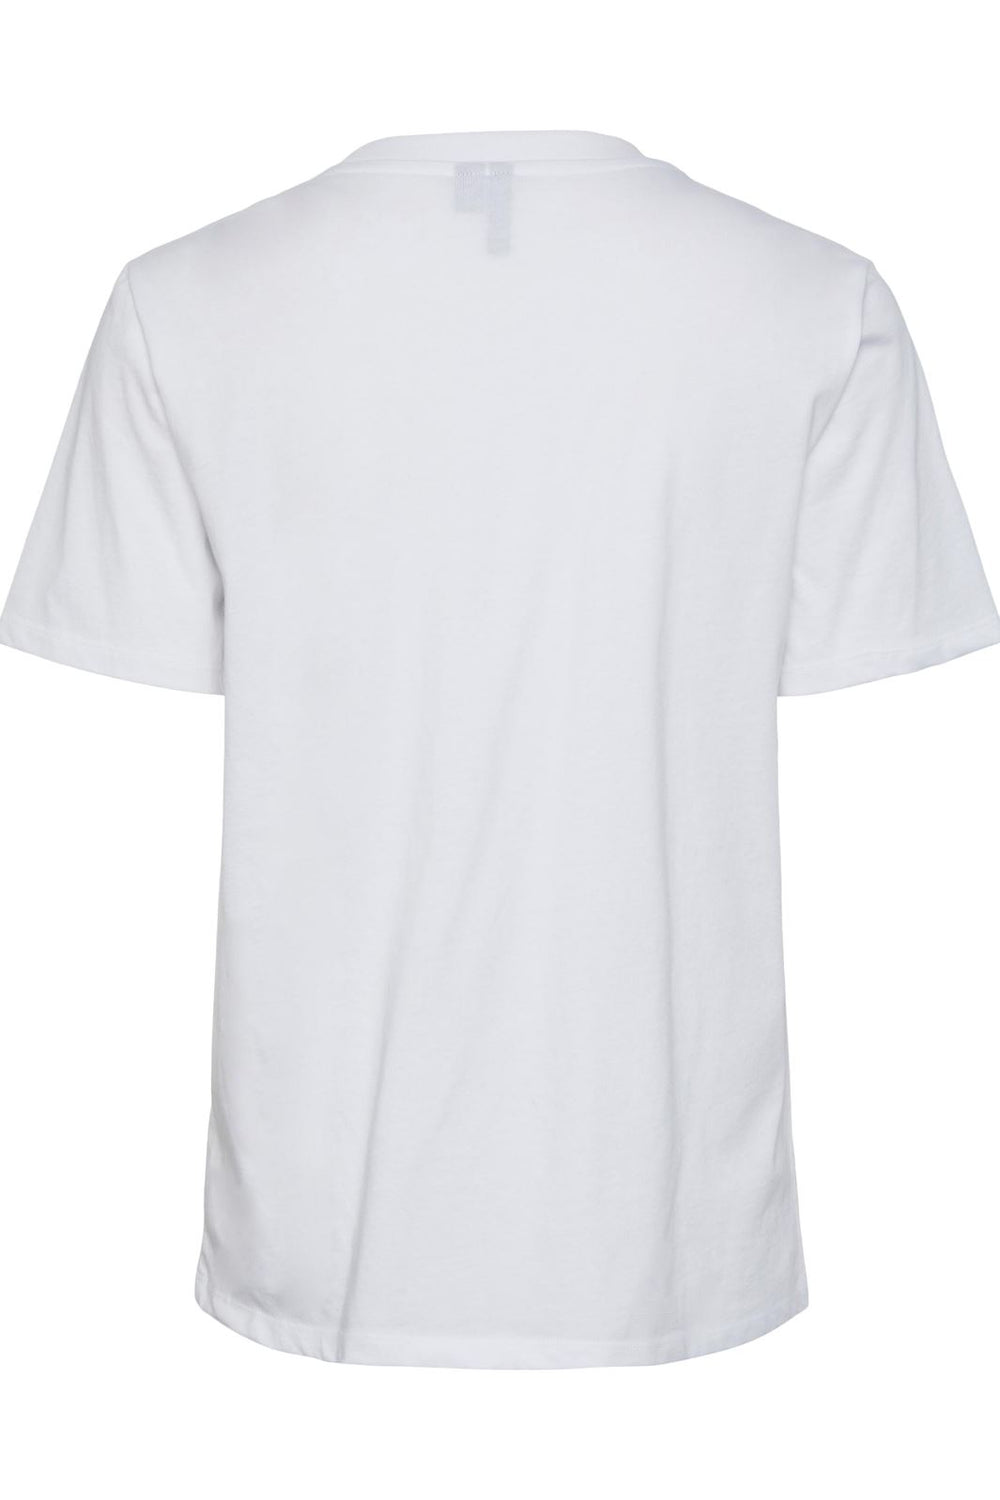 Pieces - Pcpuff Ss O-Neck Tee Box - 4425498 Bright White POWERPUFF T-shirts 